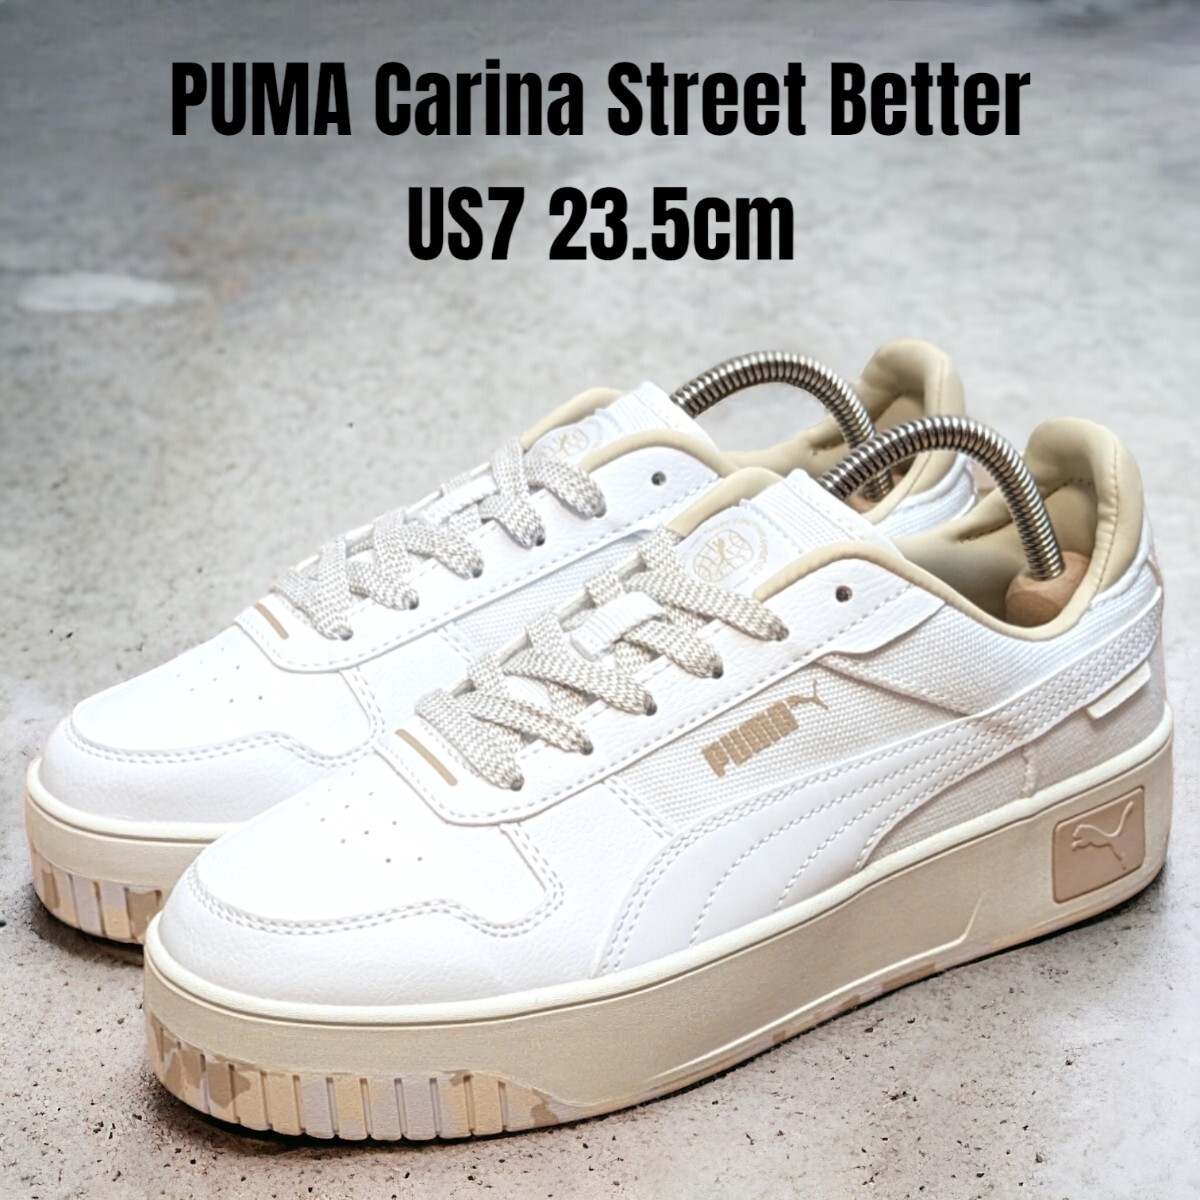 PUMA Puma Carry na Street betta -23.5cm thickness bottom sneakers lady's sneakers PUMA sneakers PUMA thickness bottom 